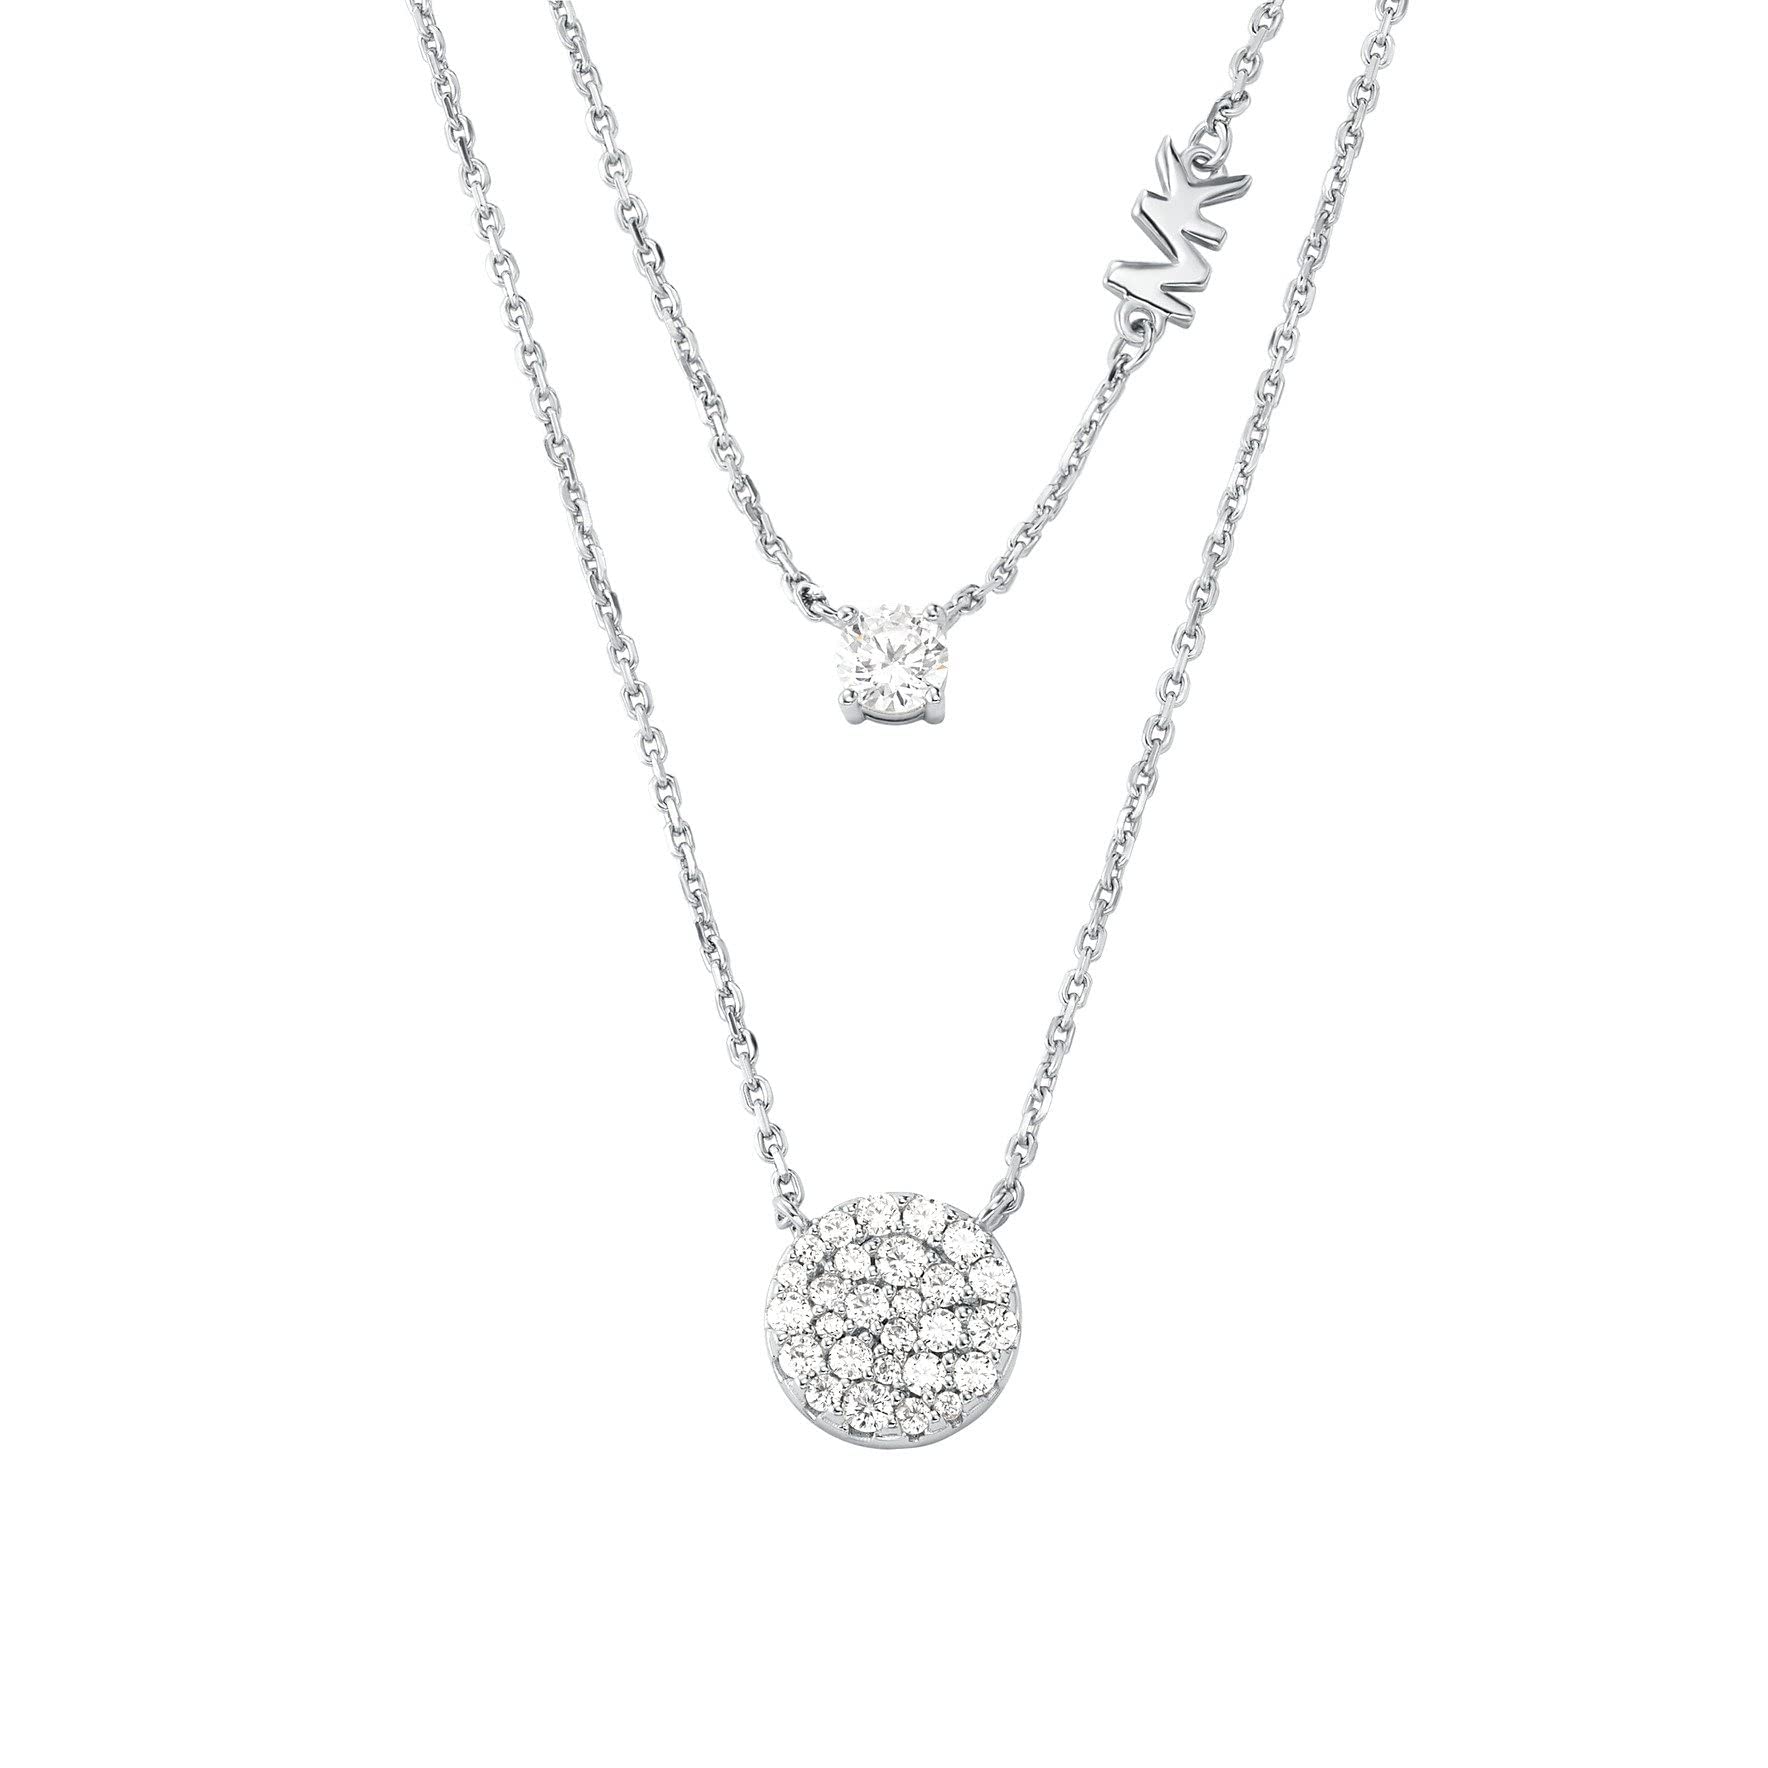 Mua Michael Kors Womens Silver Tone Pendant Necklace With Crystal Accents  trên Amazon Mỹ chính hãng 2023  Giaonhan247